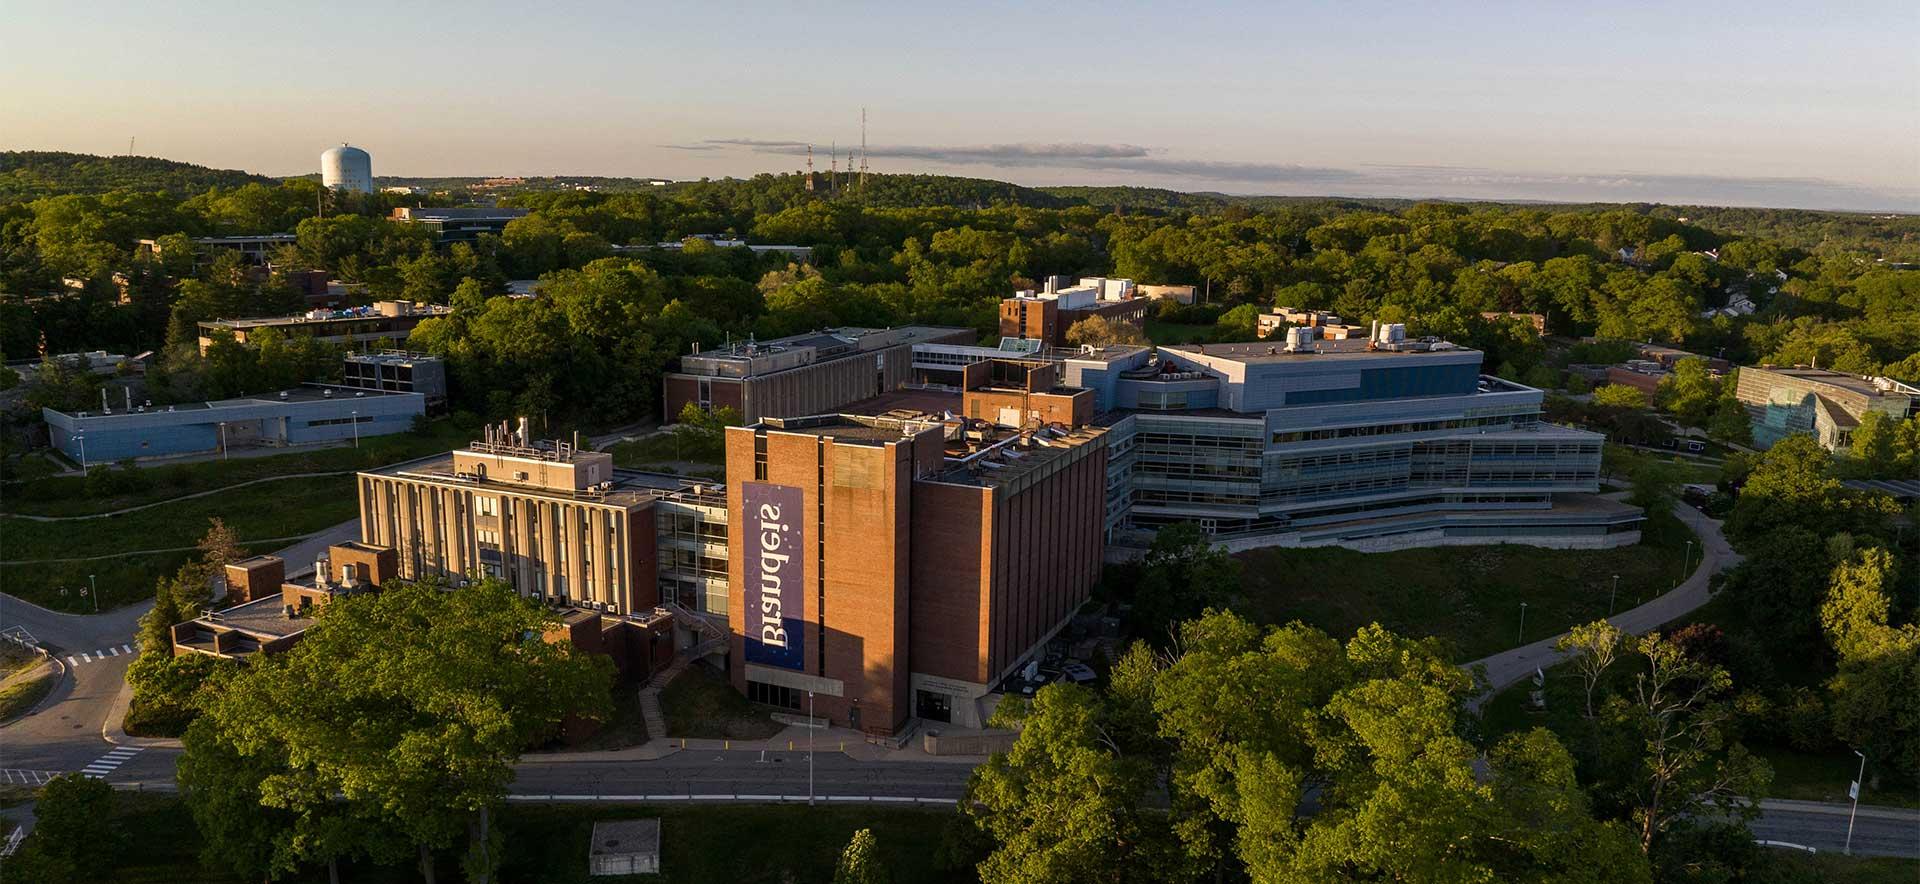 Aerial view of Brandeis campus